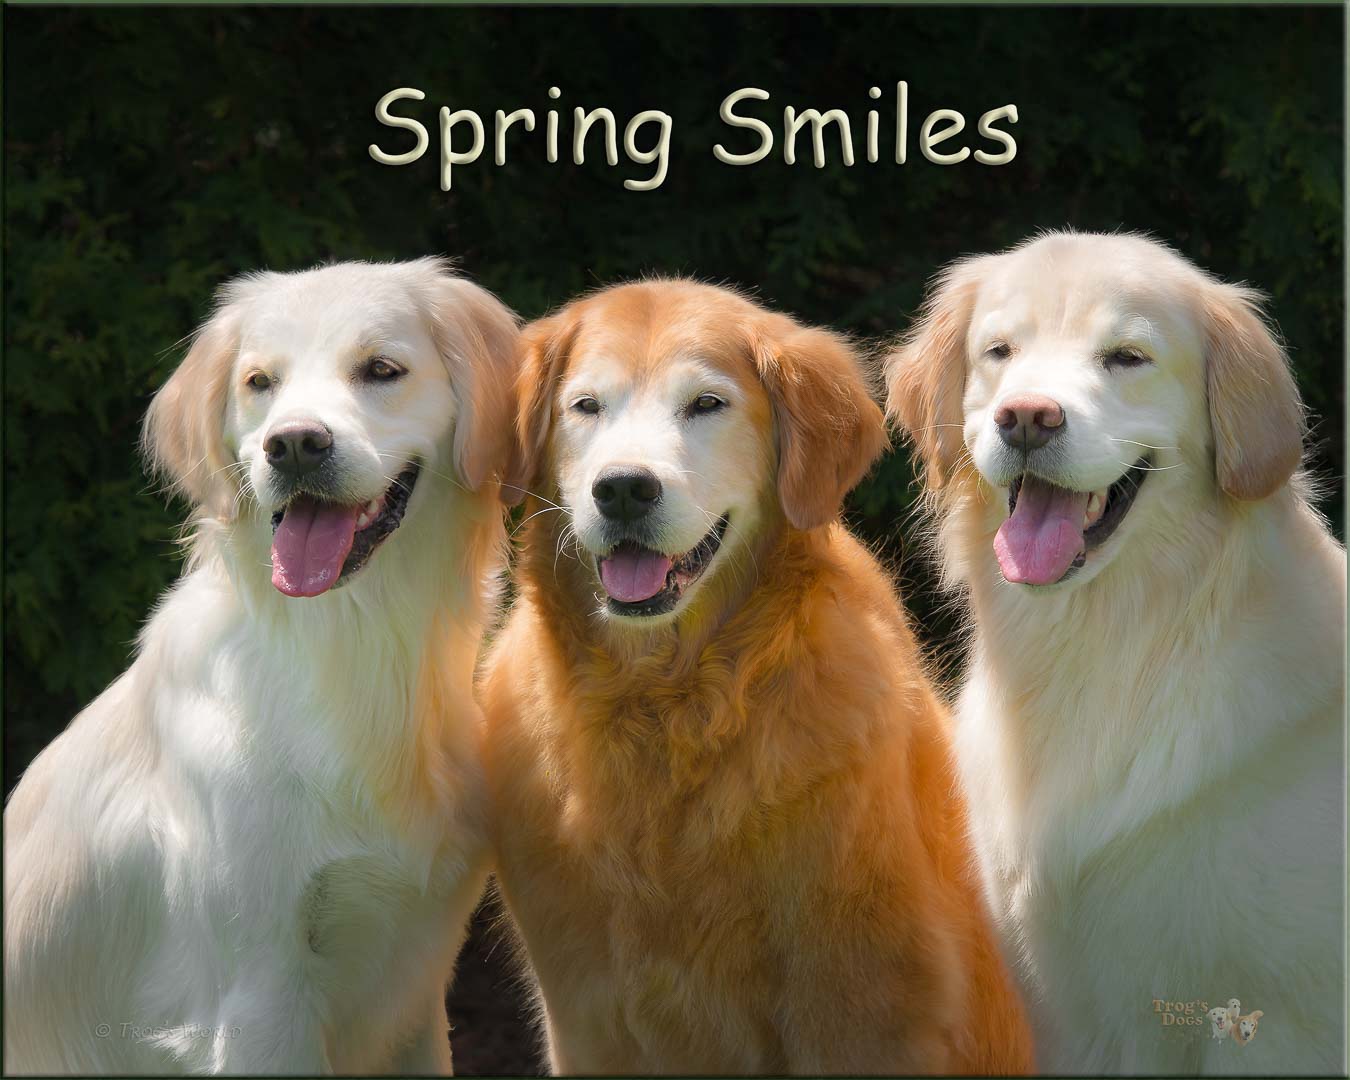 Three golden retrievers smiling